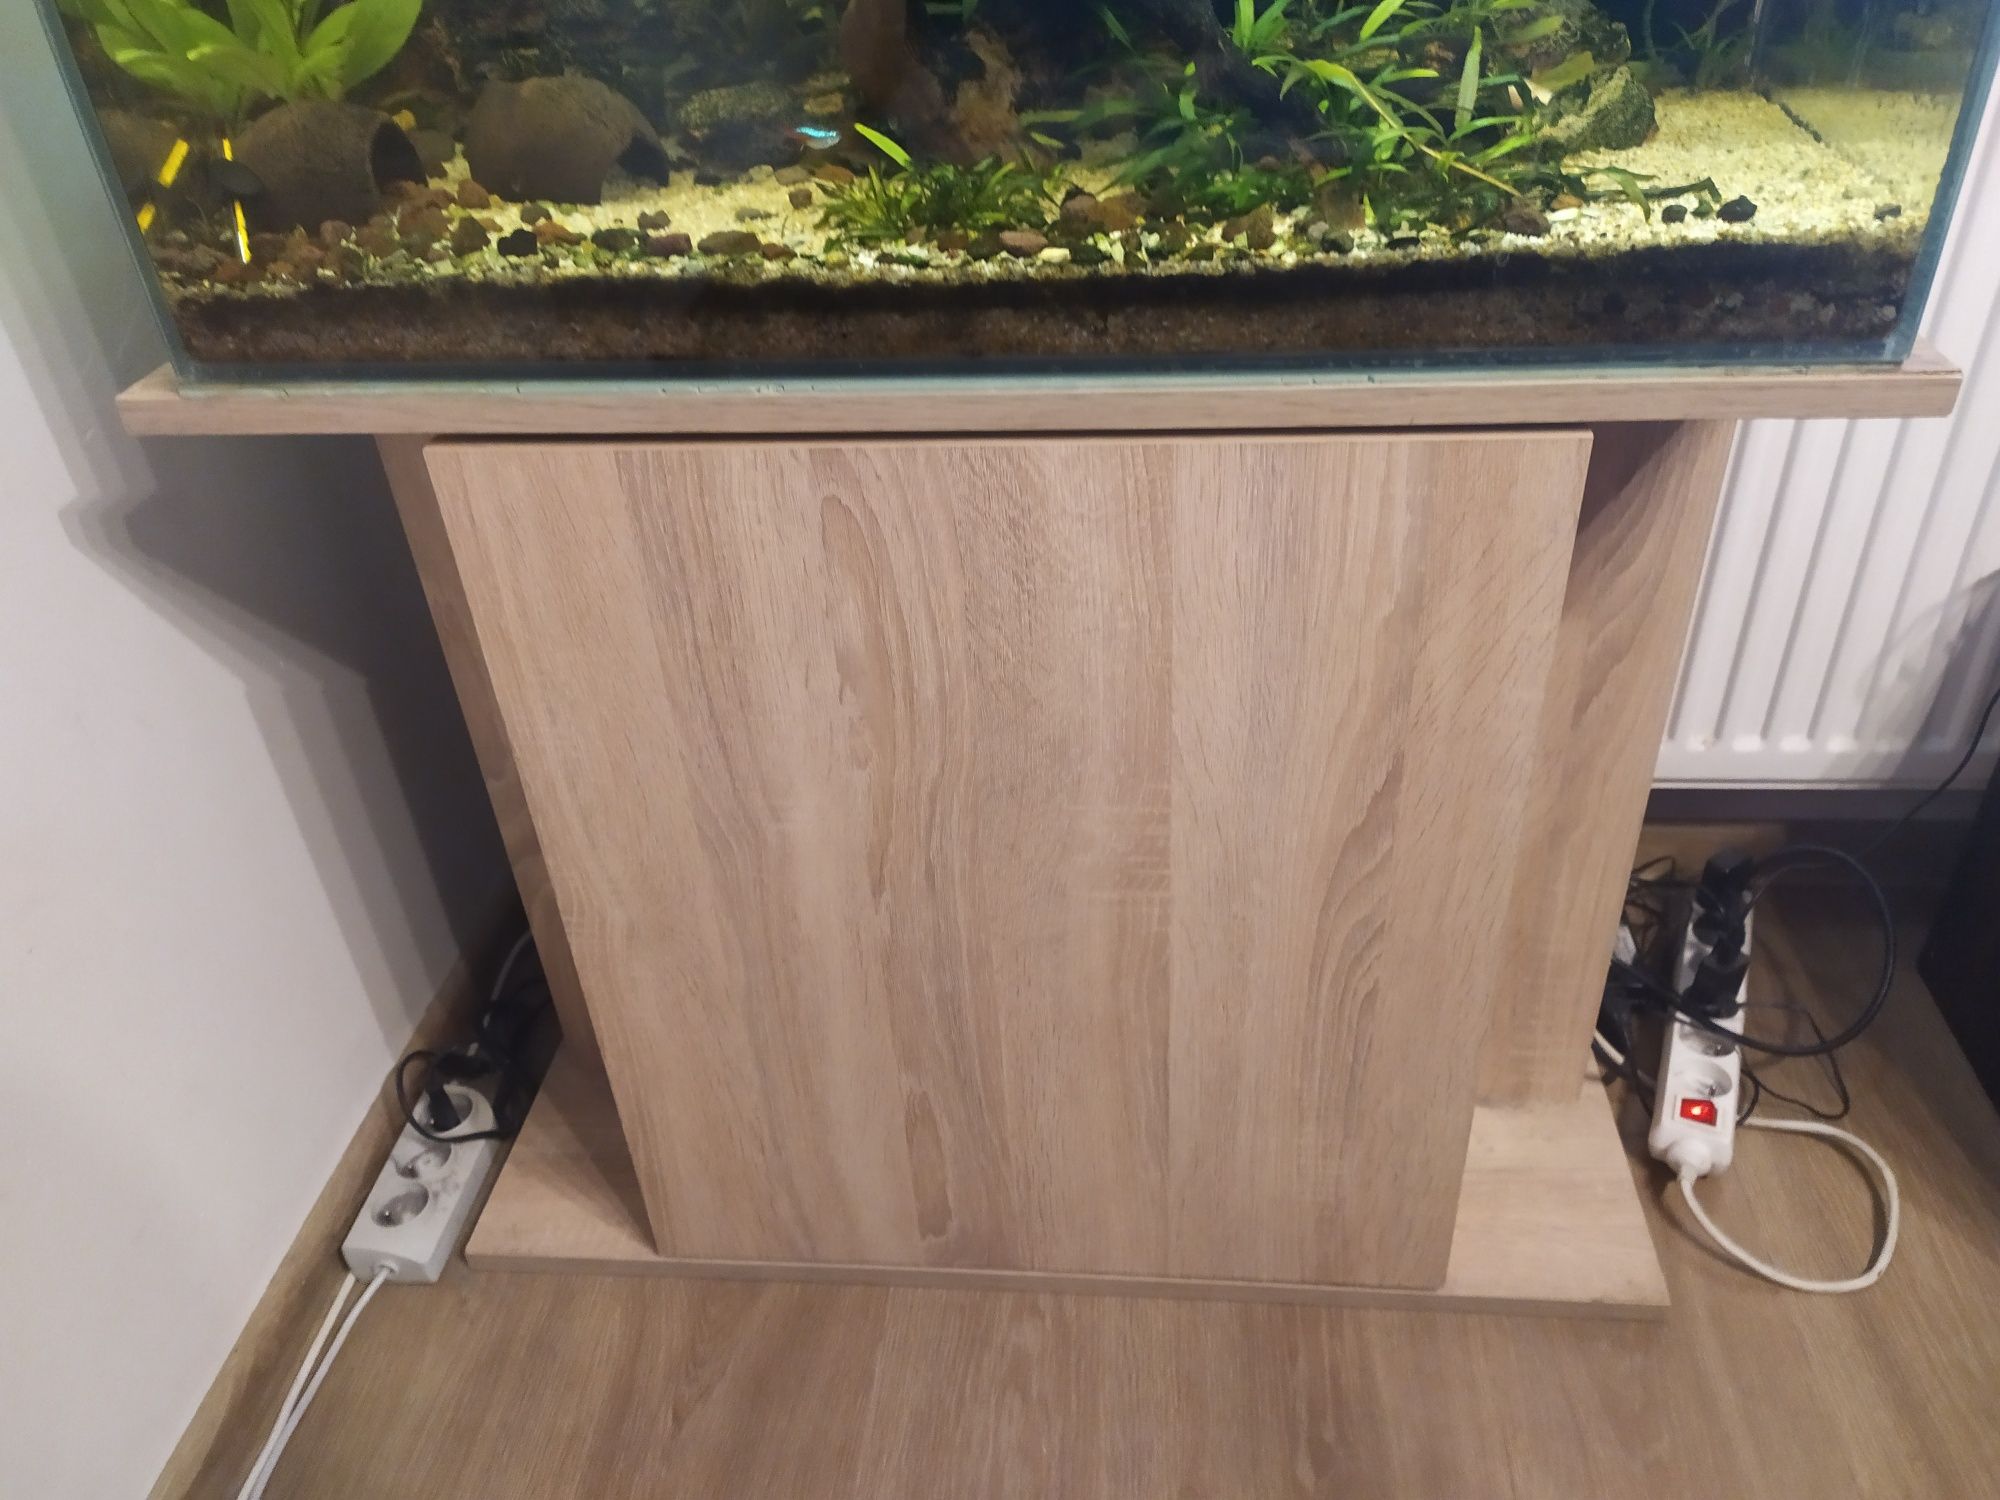 Żywe akwarium Aquael z rybkami 150L + szafka